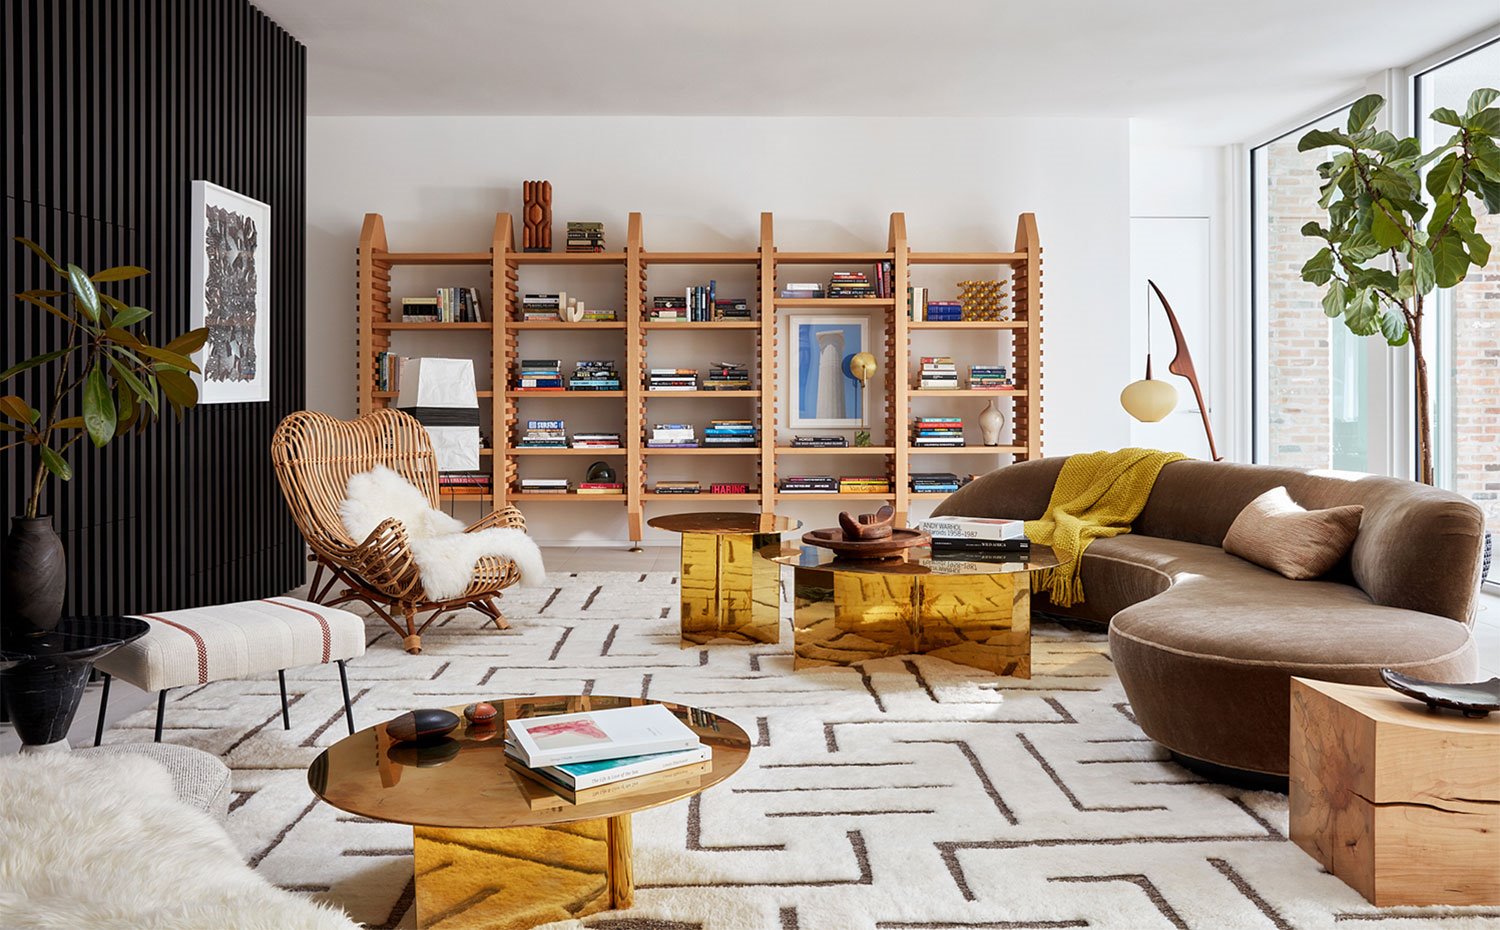 Salón con sofá curvo en marrón, butaca en fibras naturales, mesas doradas, librería de madera